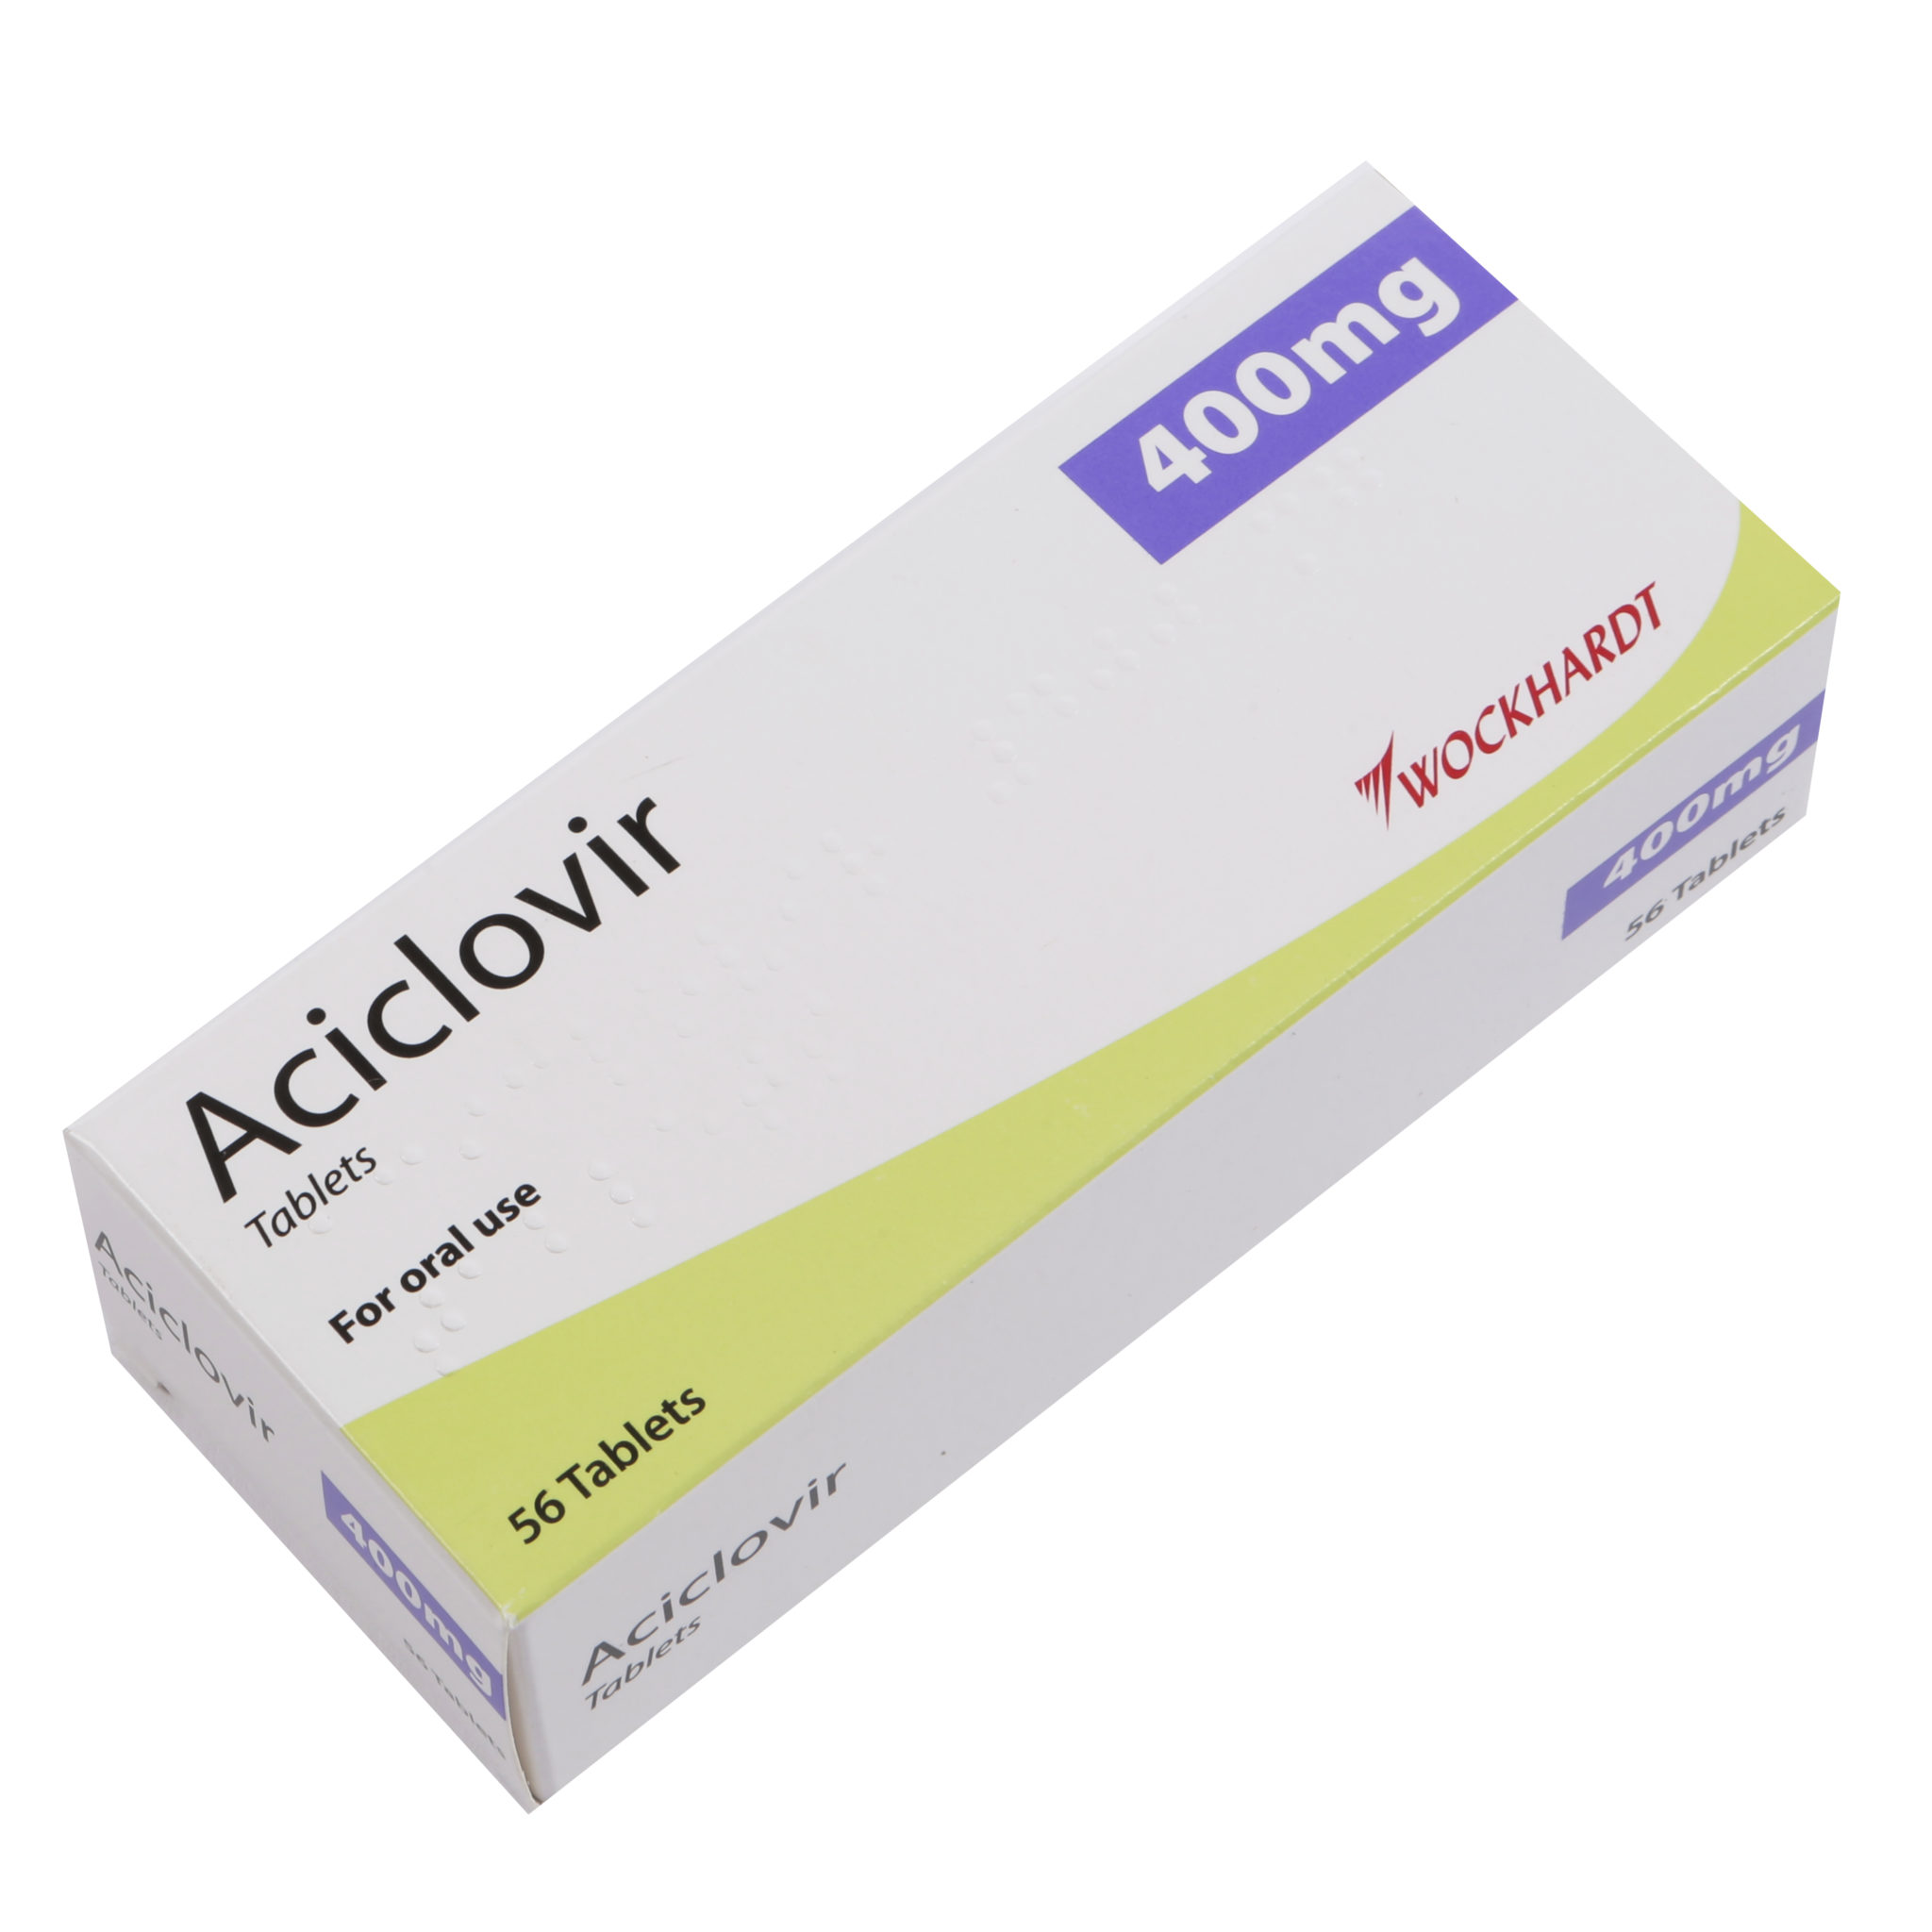 Aciclovir 400mg Tablets (45 Tablets)